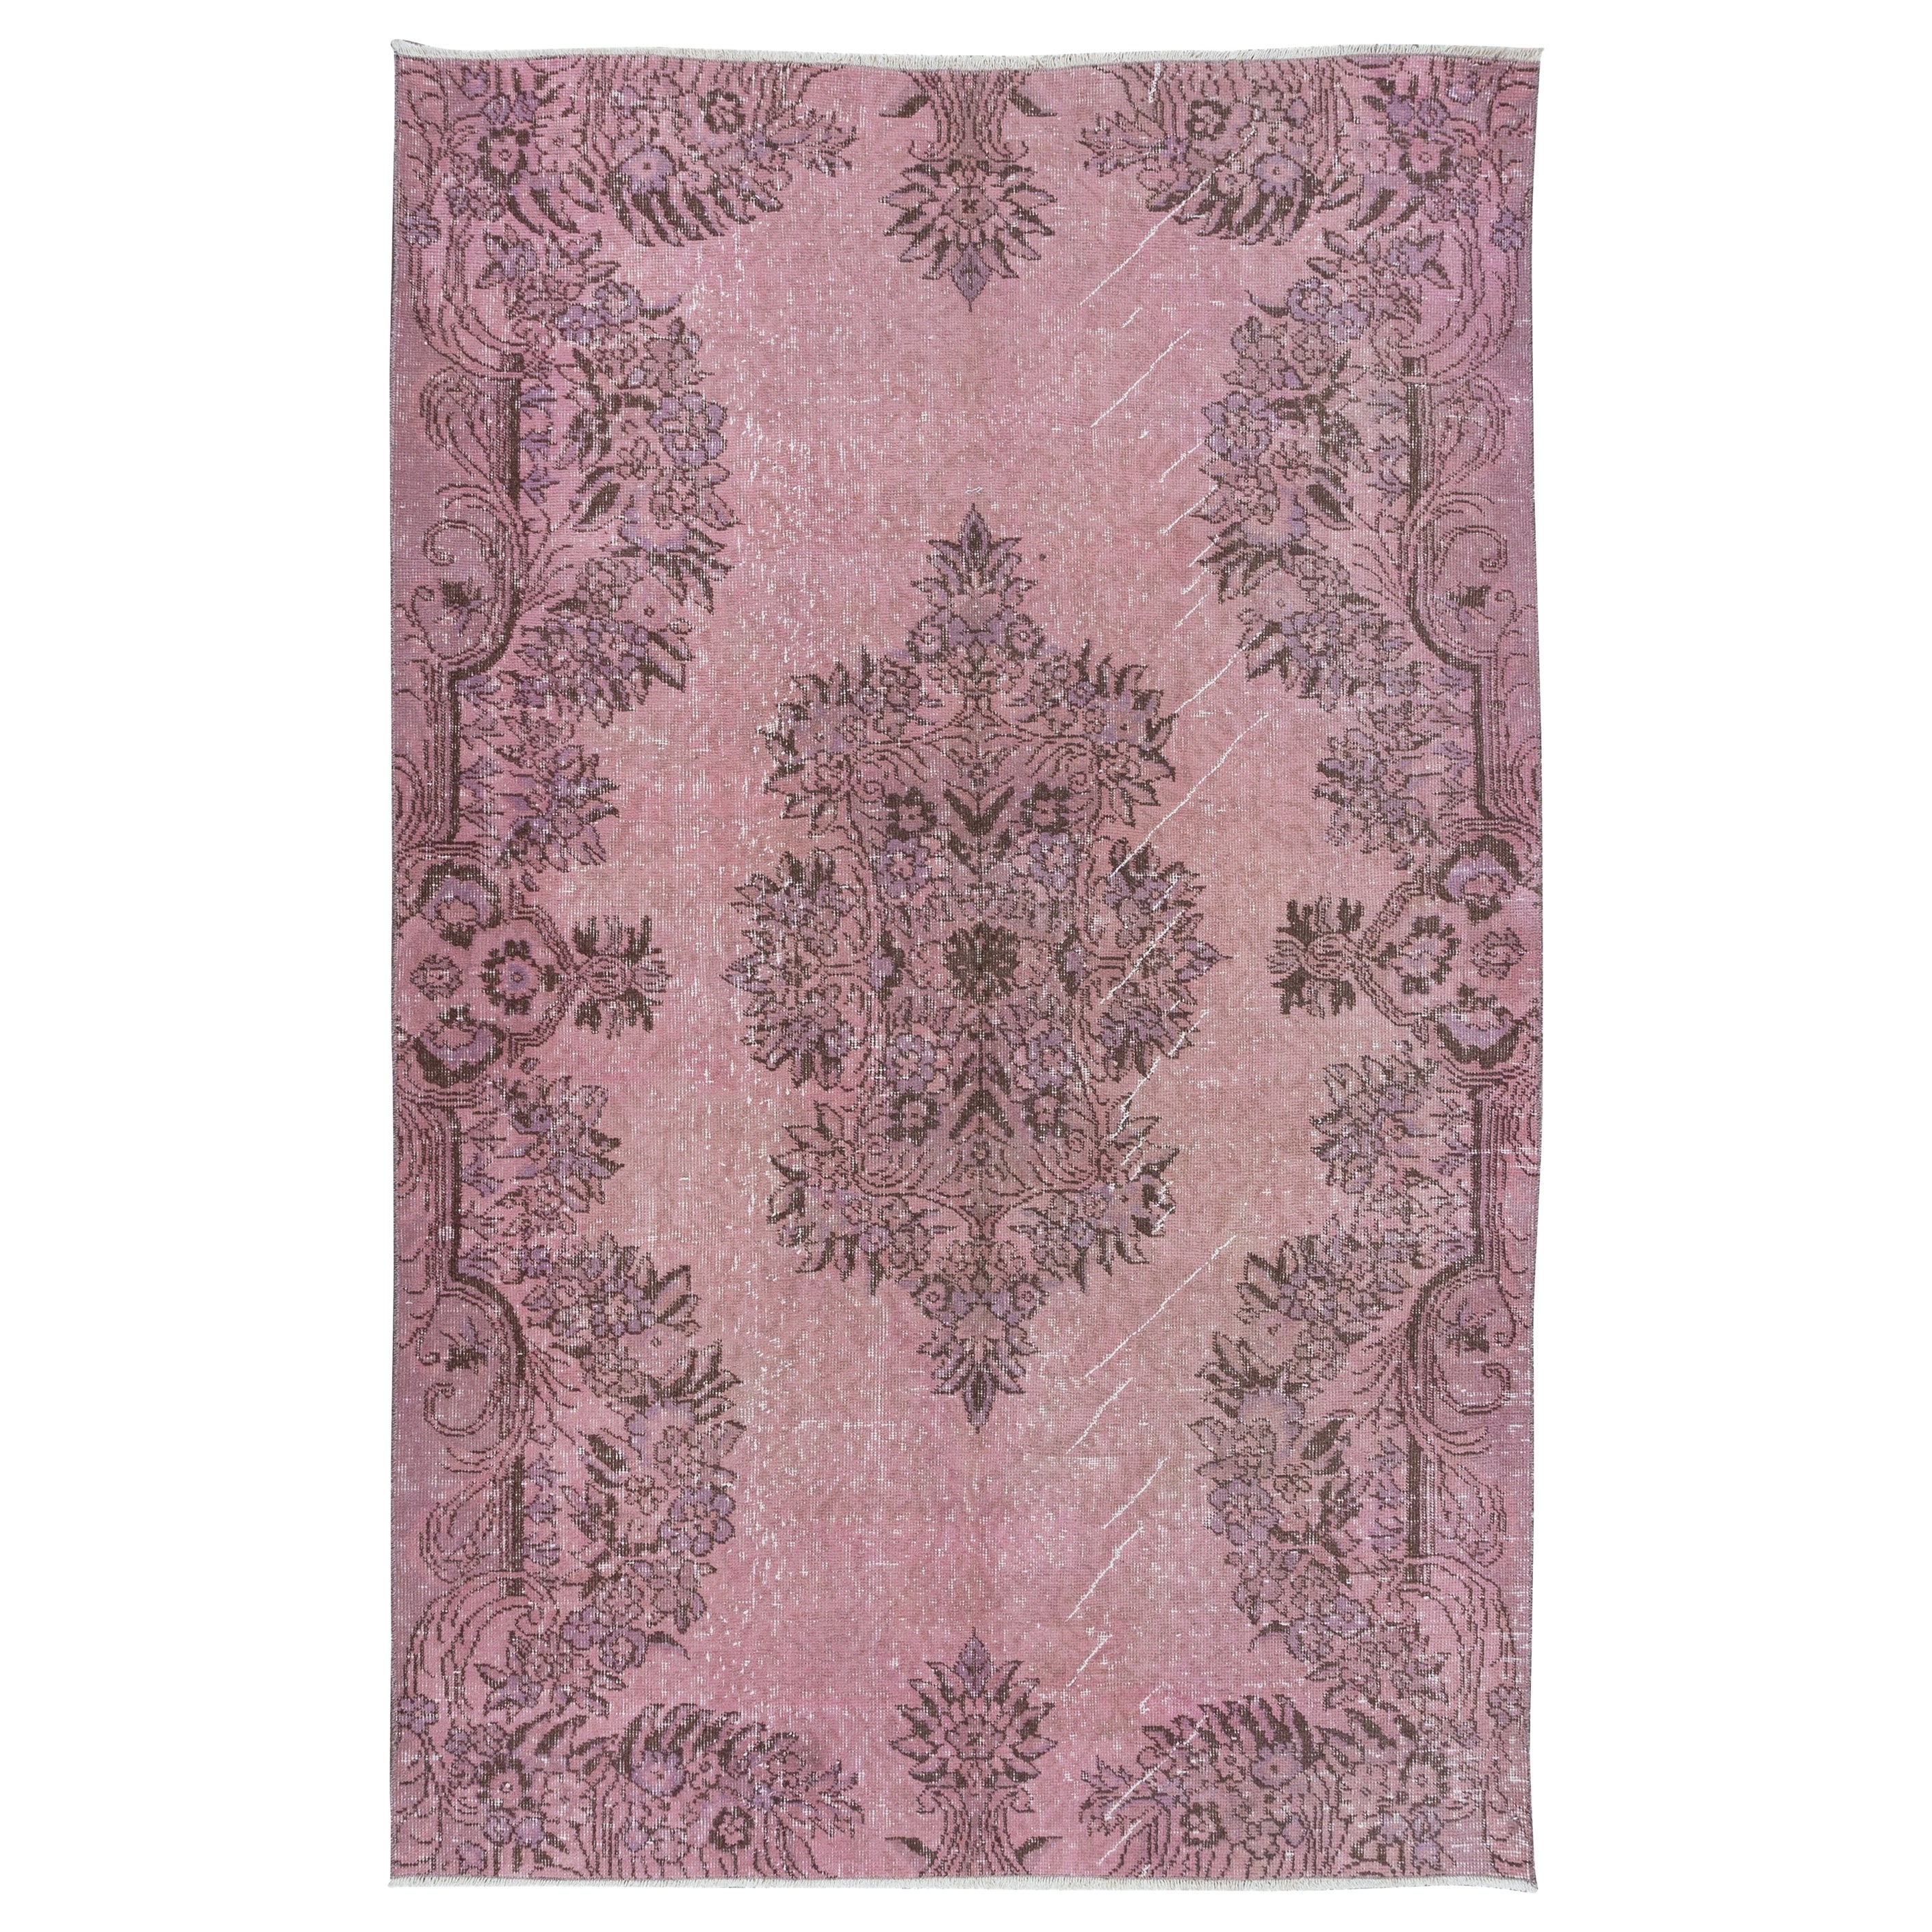 5x7.7 Ft Soft Pink Handmade Area Rug, Room Size Modern Turkish Wool Carpet